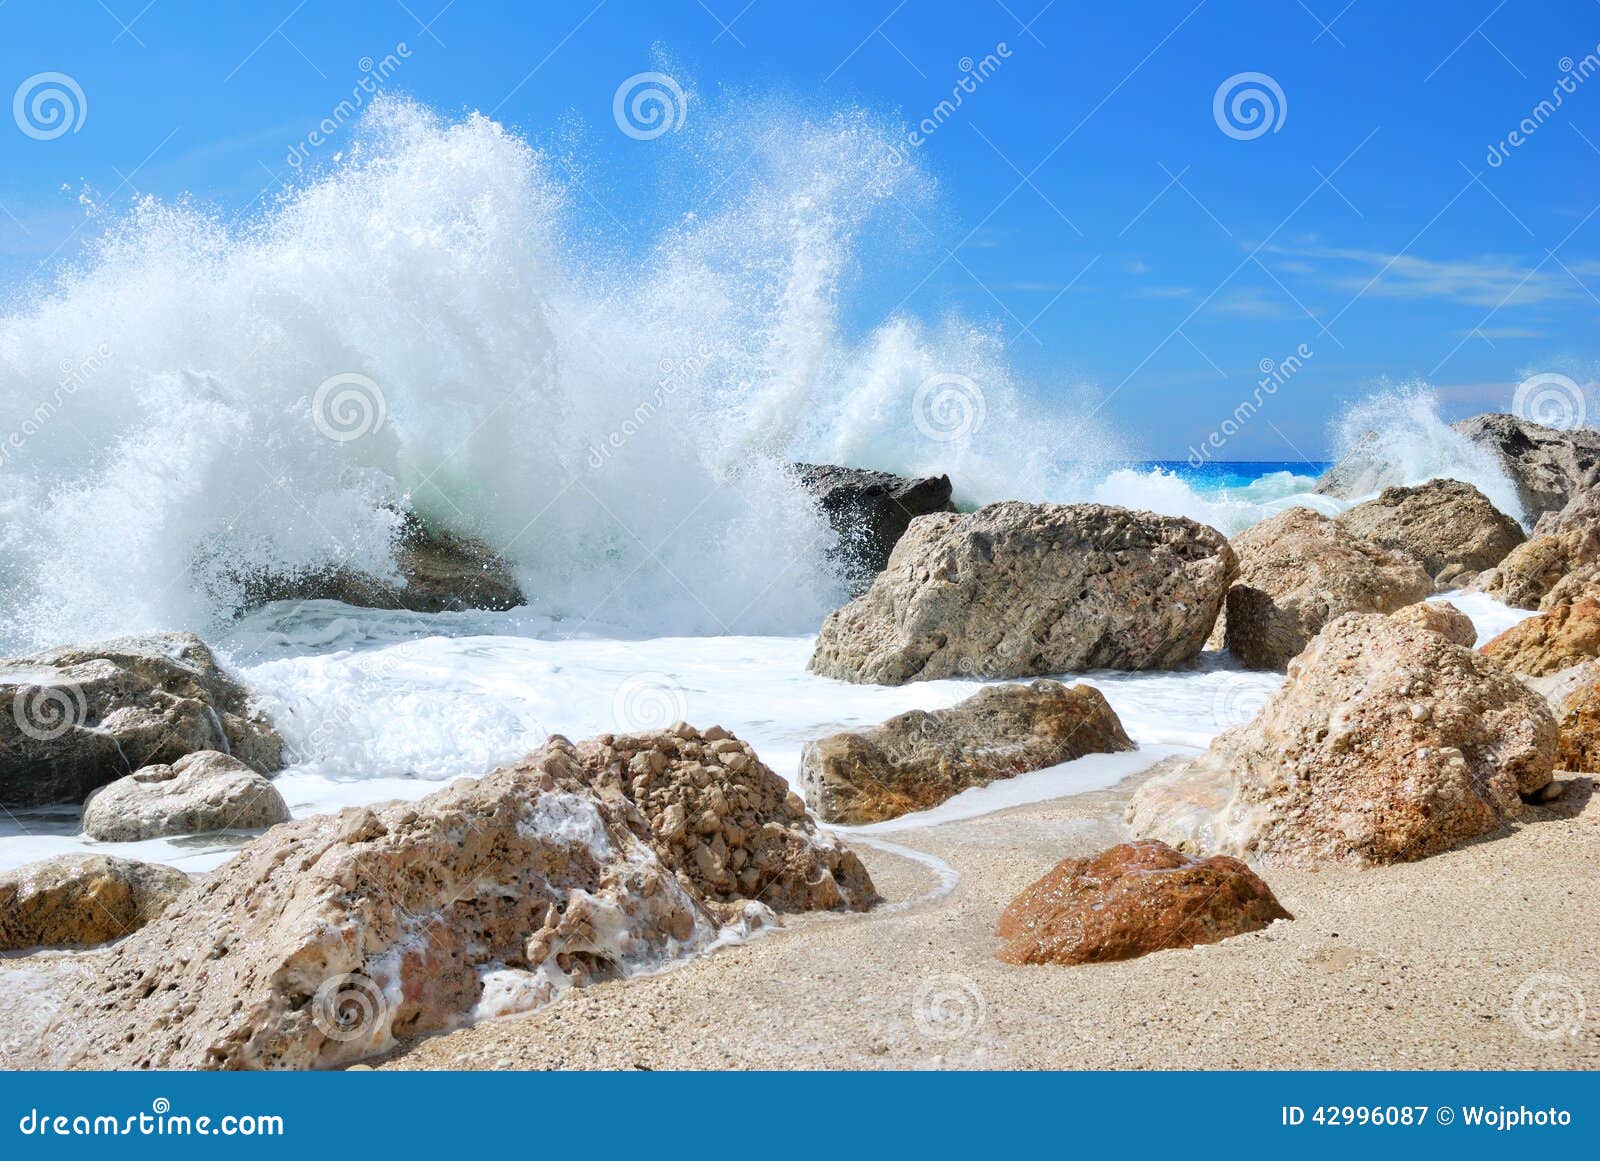 big sea wave splashing over the shore rocks